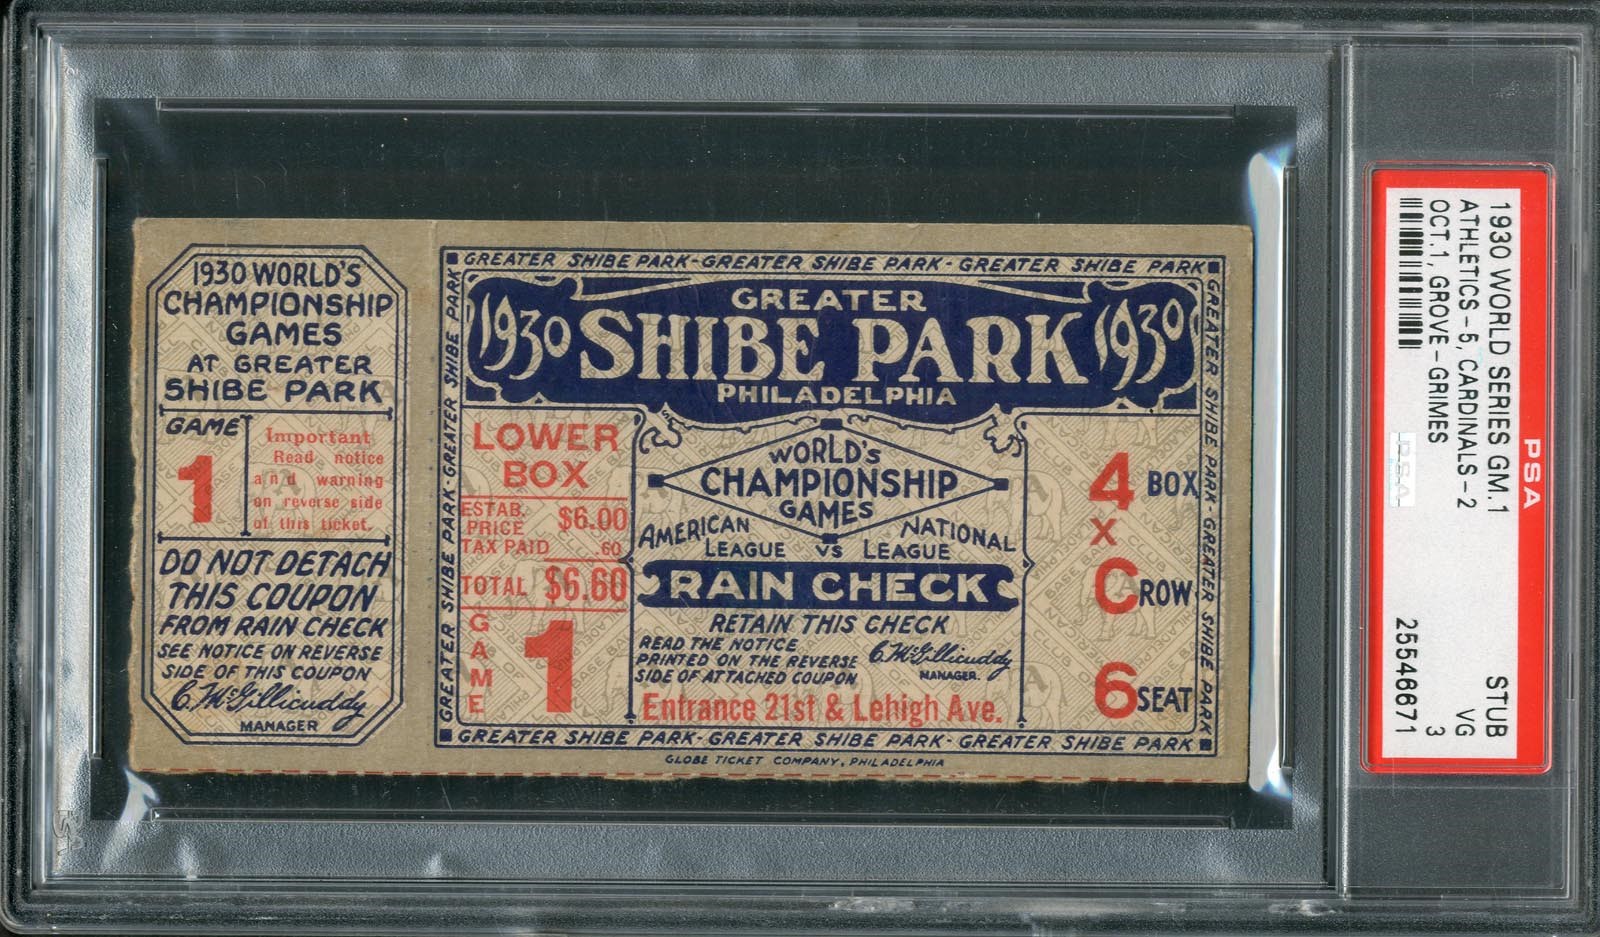 - 1930 World Series Game 1 Ticket and Souvenir Program